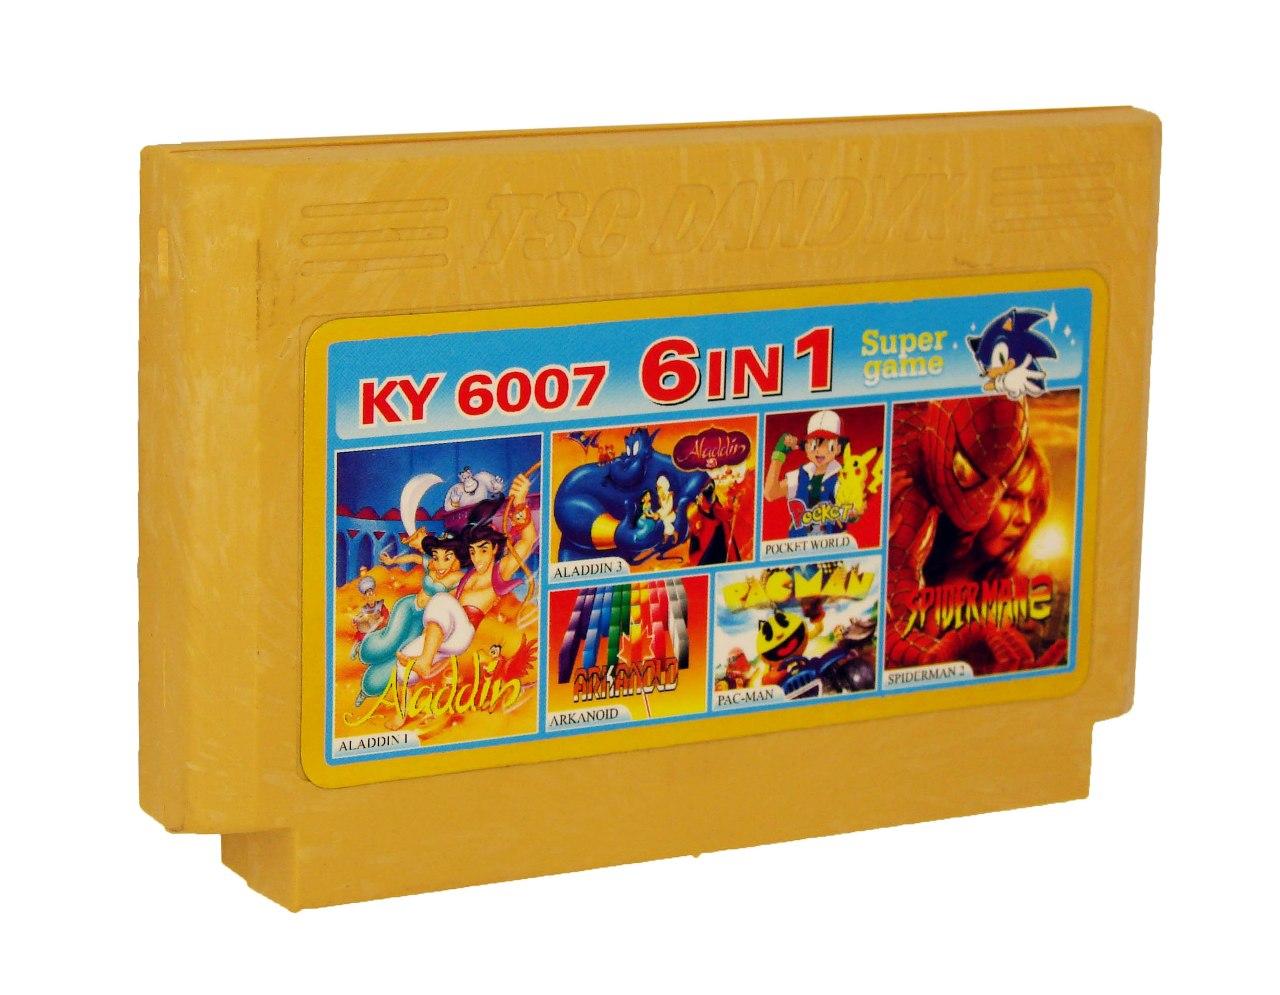    KY 6007 6 in 1 (Dendy), Spiderman 2, Pac-man, Pocket World, Arkanoid, Aladdin, Aladdin 3